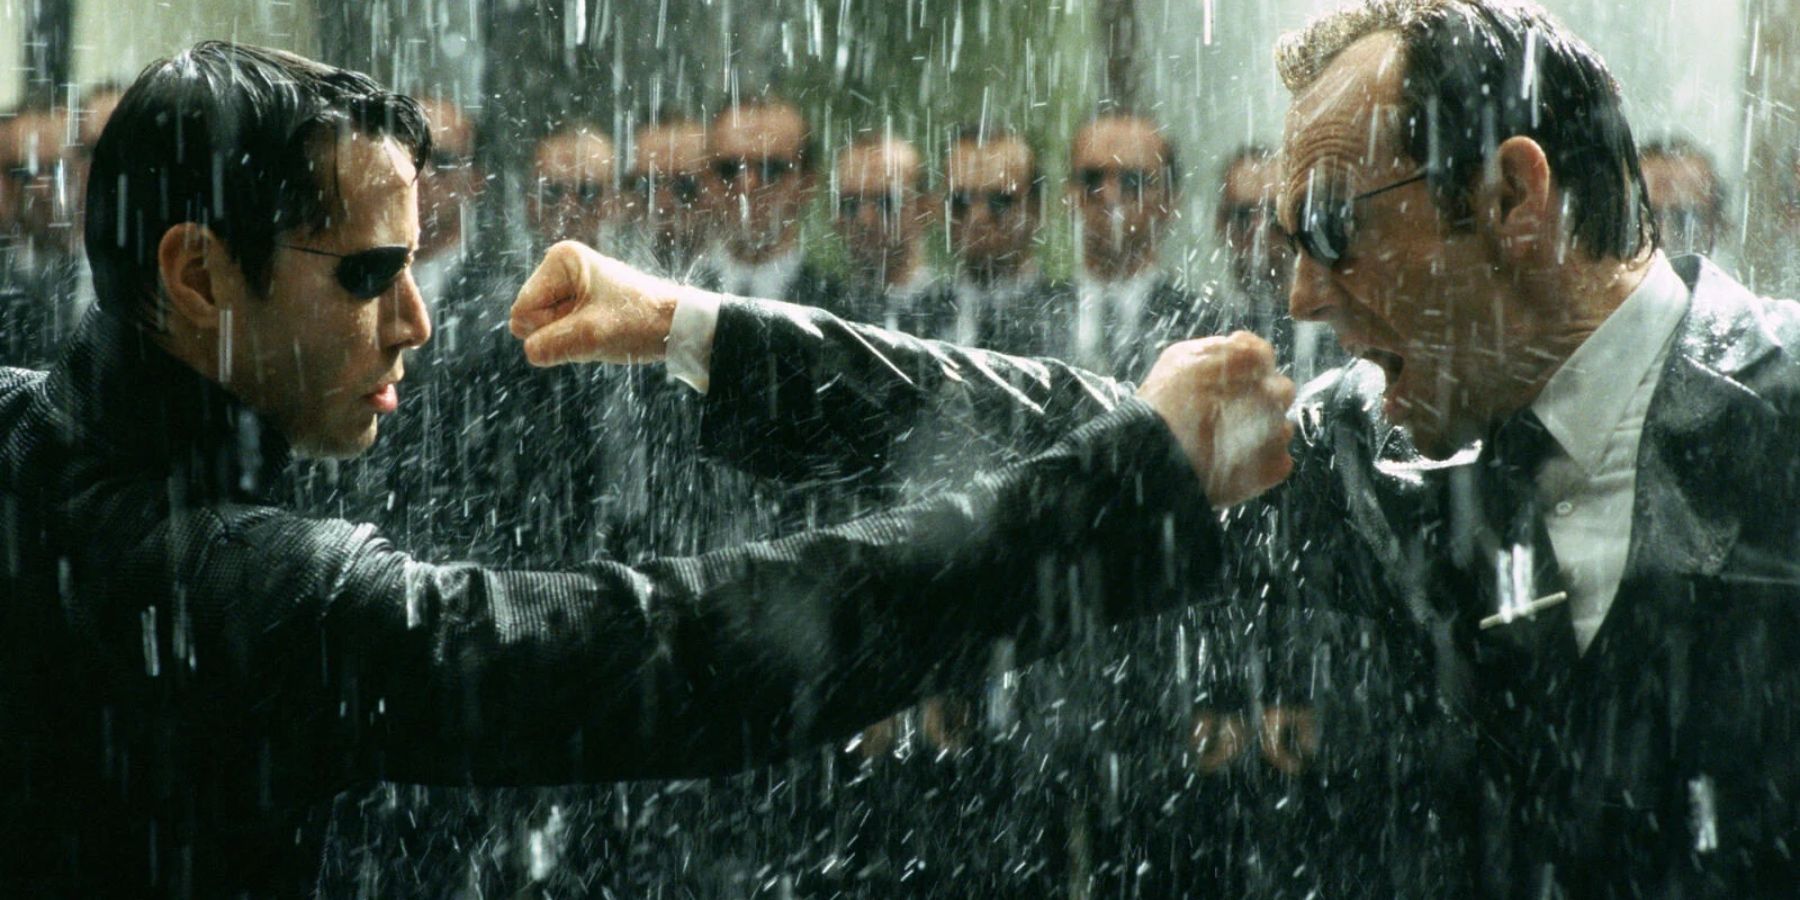 Neo-and-Smith-fight-in-the-rain-in-The-Matrix-Revolutions